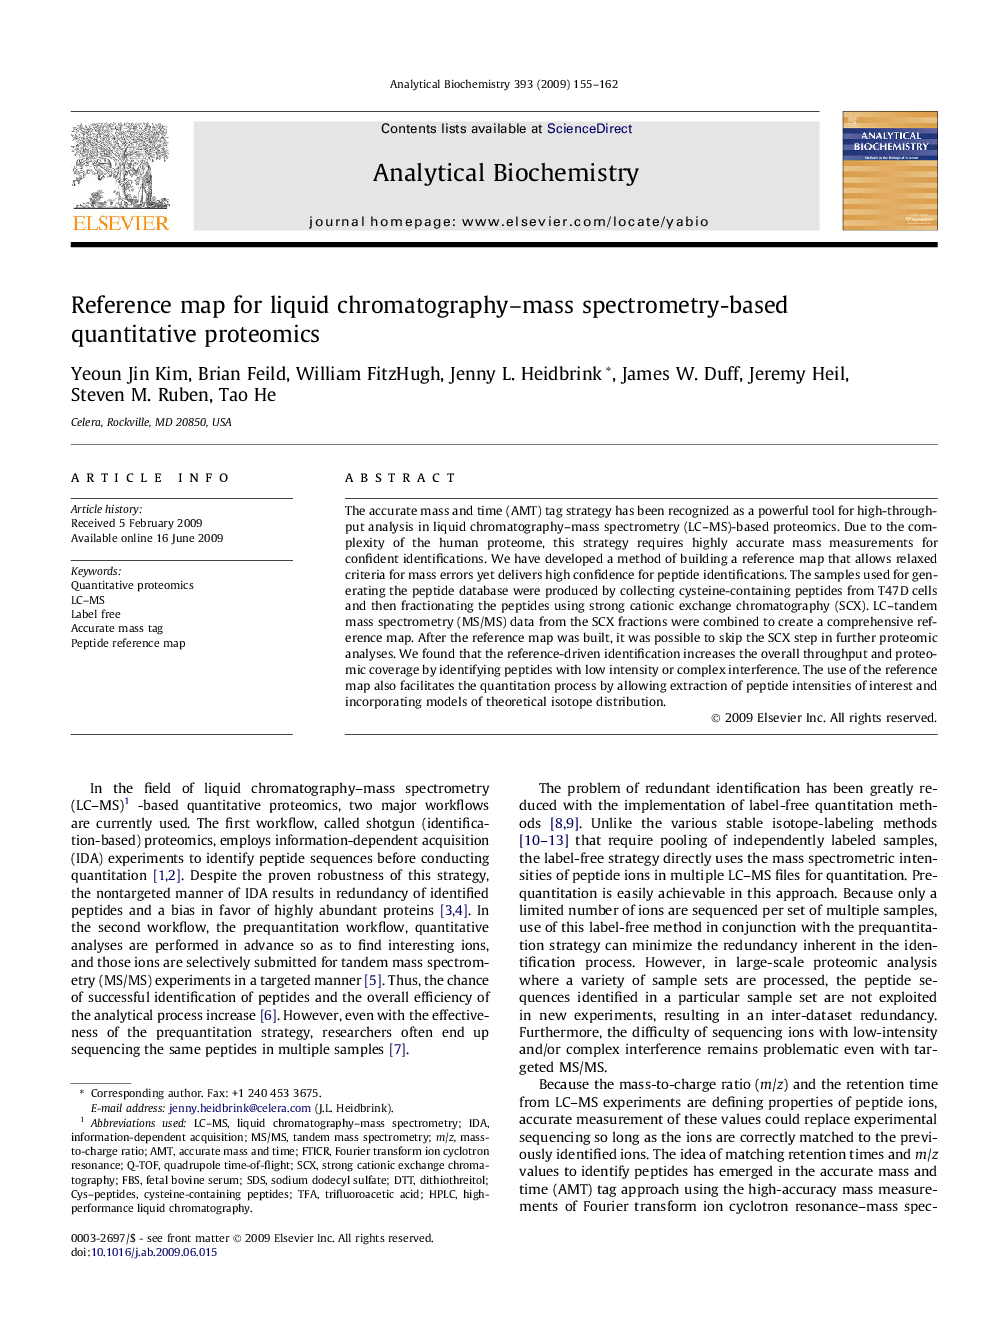 Reference map for liquid chromatography-mass spectrometry-based quantitative proteomics